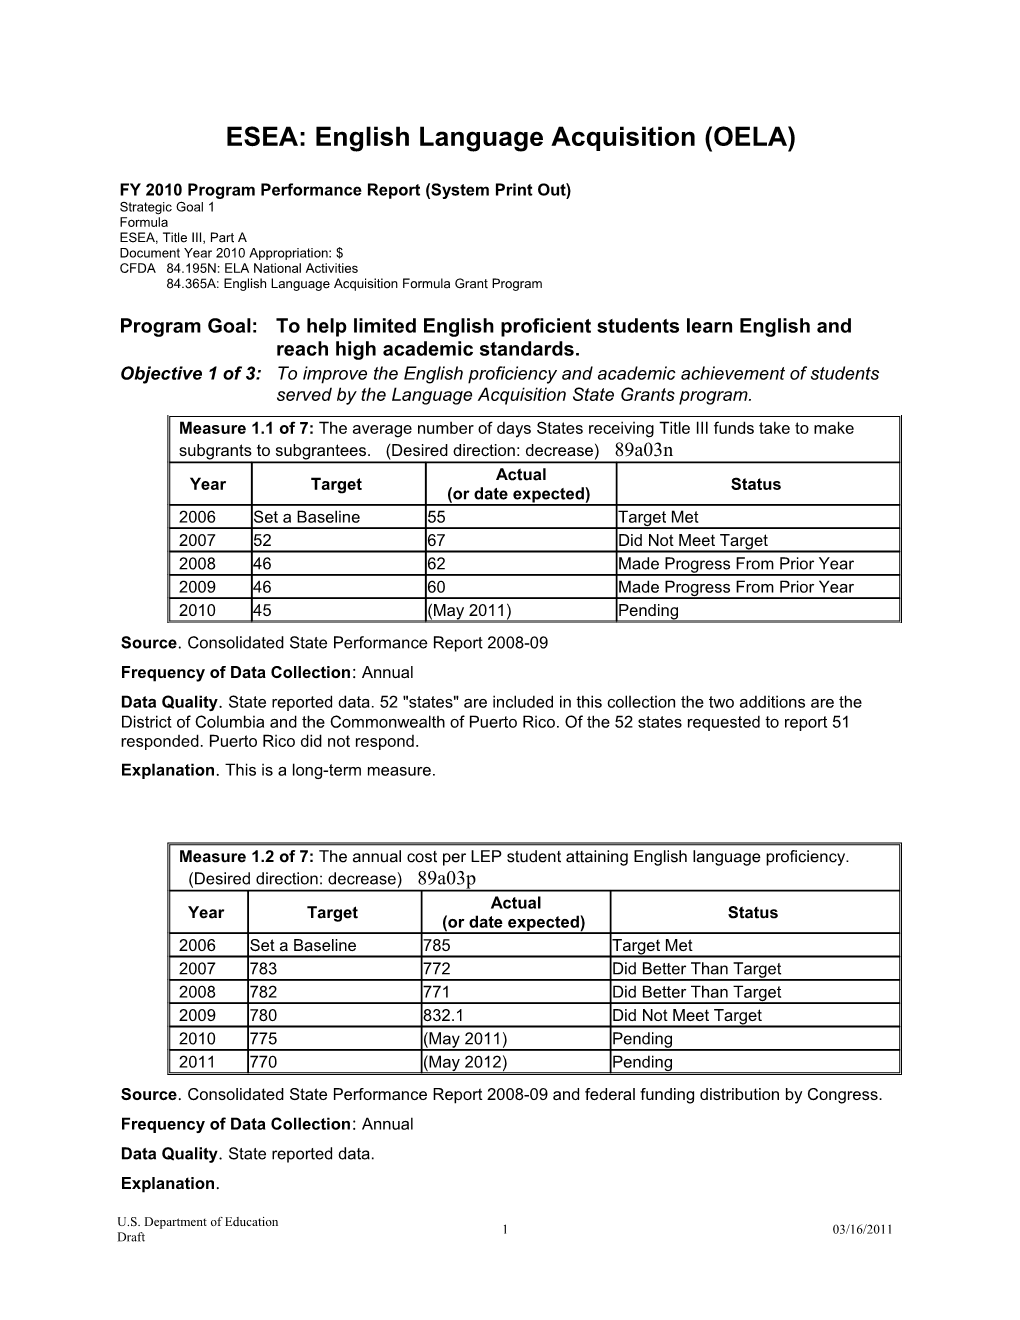 ESEA: English Language Acquisition (OELA) FY 2010 Program Performance Report (MS Word)